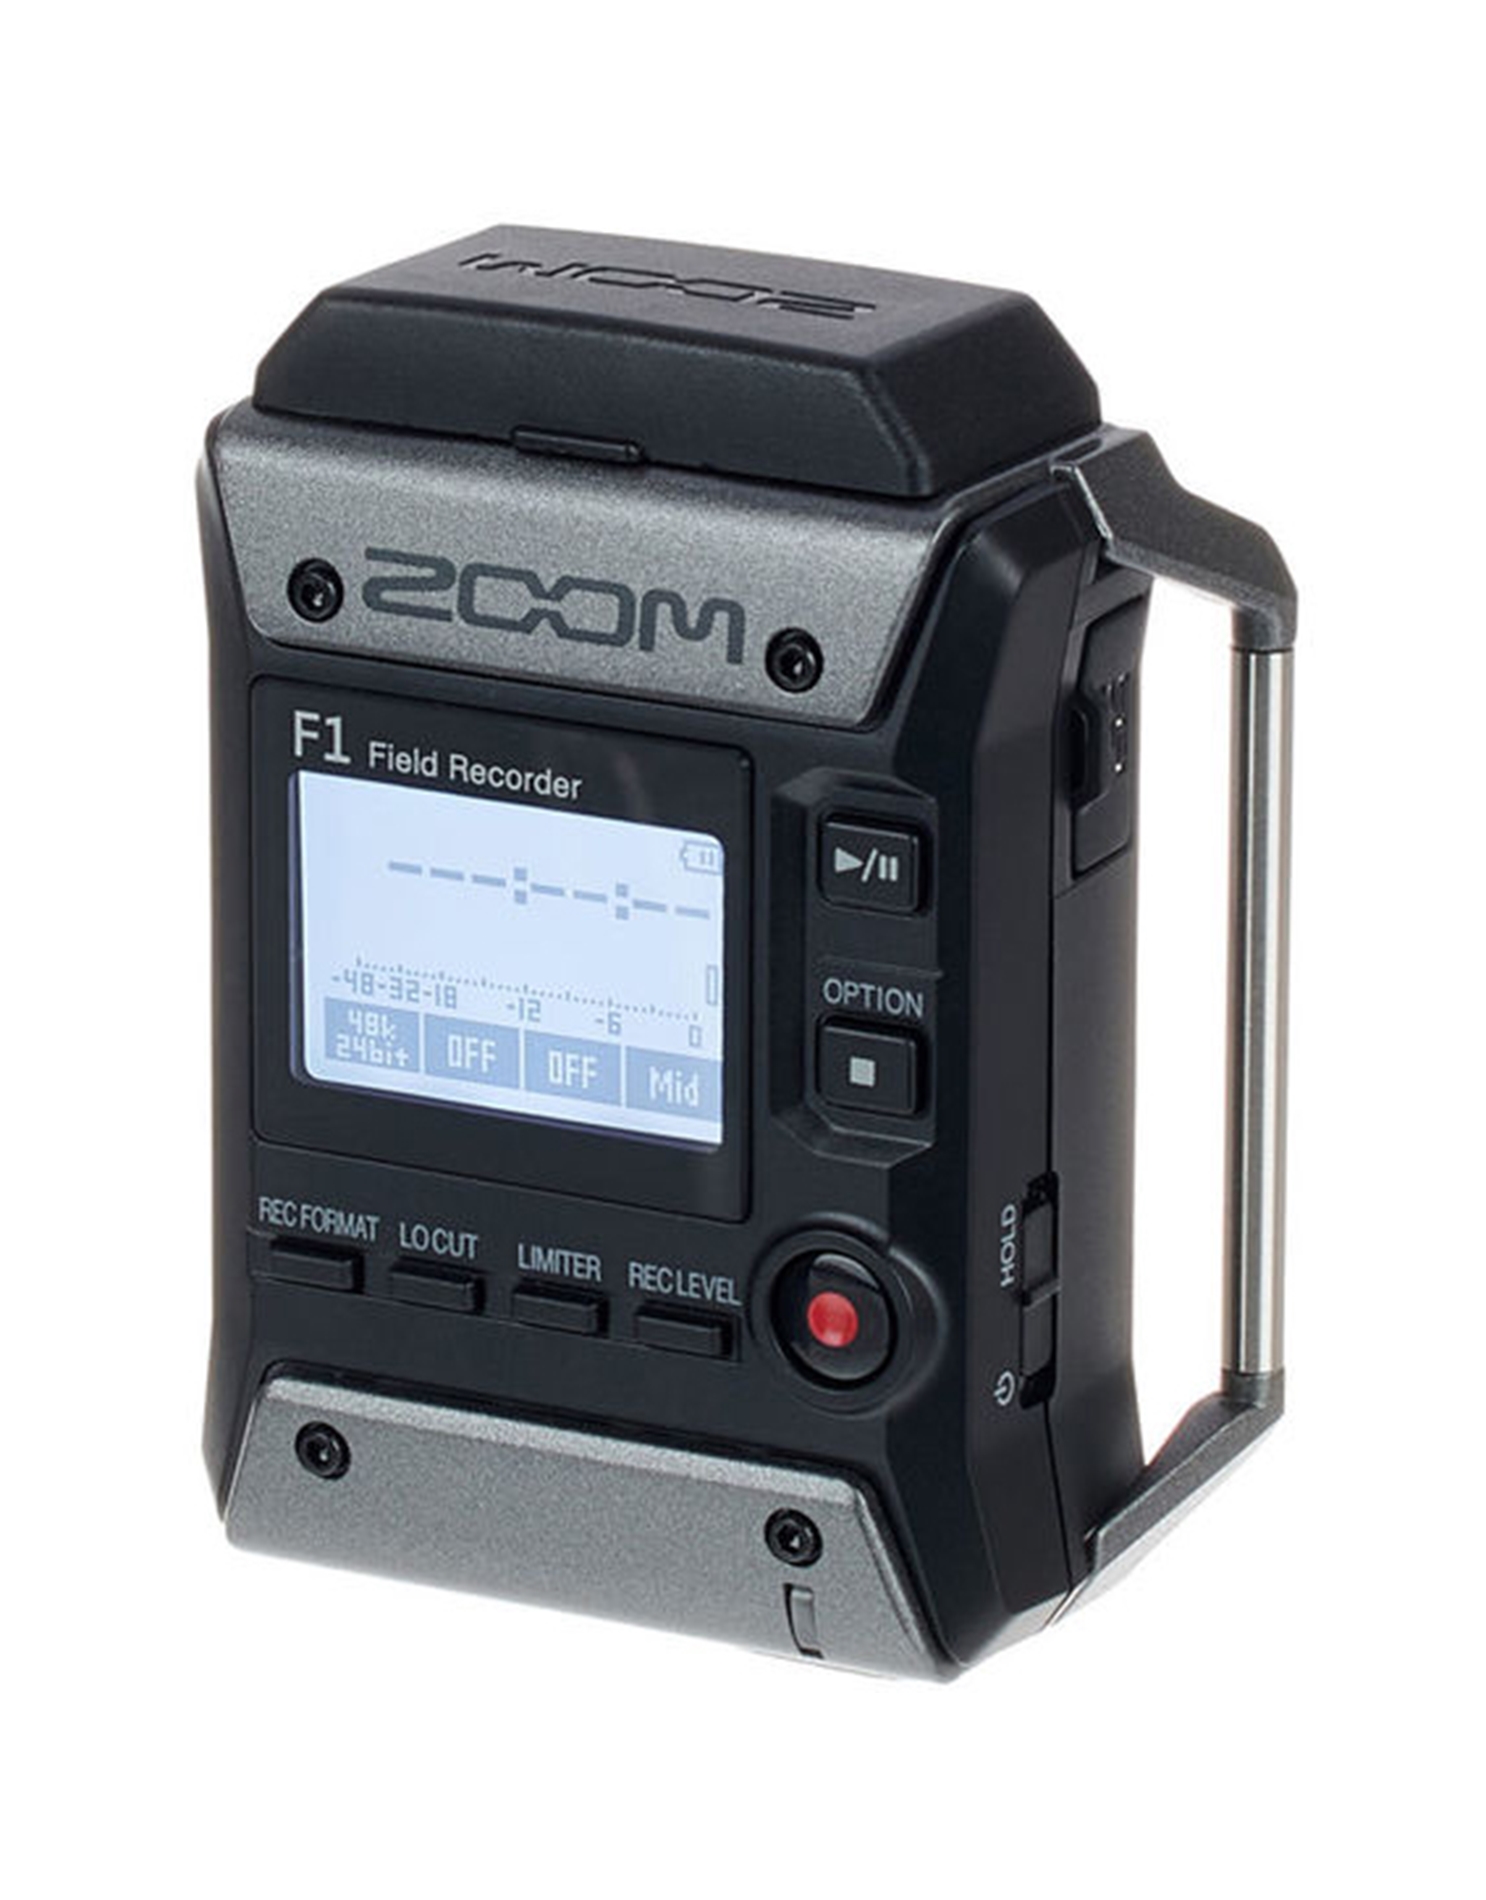 Zoom F1 Field Recorder with Lavalier Microphone F1LP パックage Tascam Mixg  Headphones， Dual-Head Mic， Photo Savgs プレミ 古典 www.copycorp.com.ve